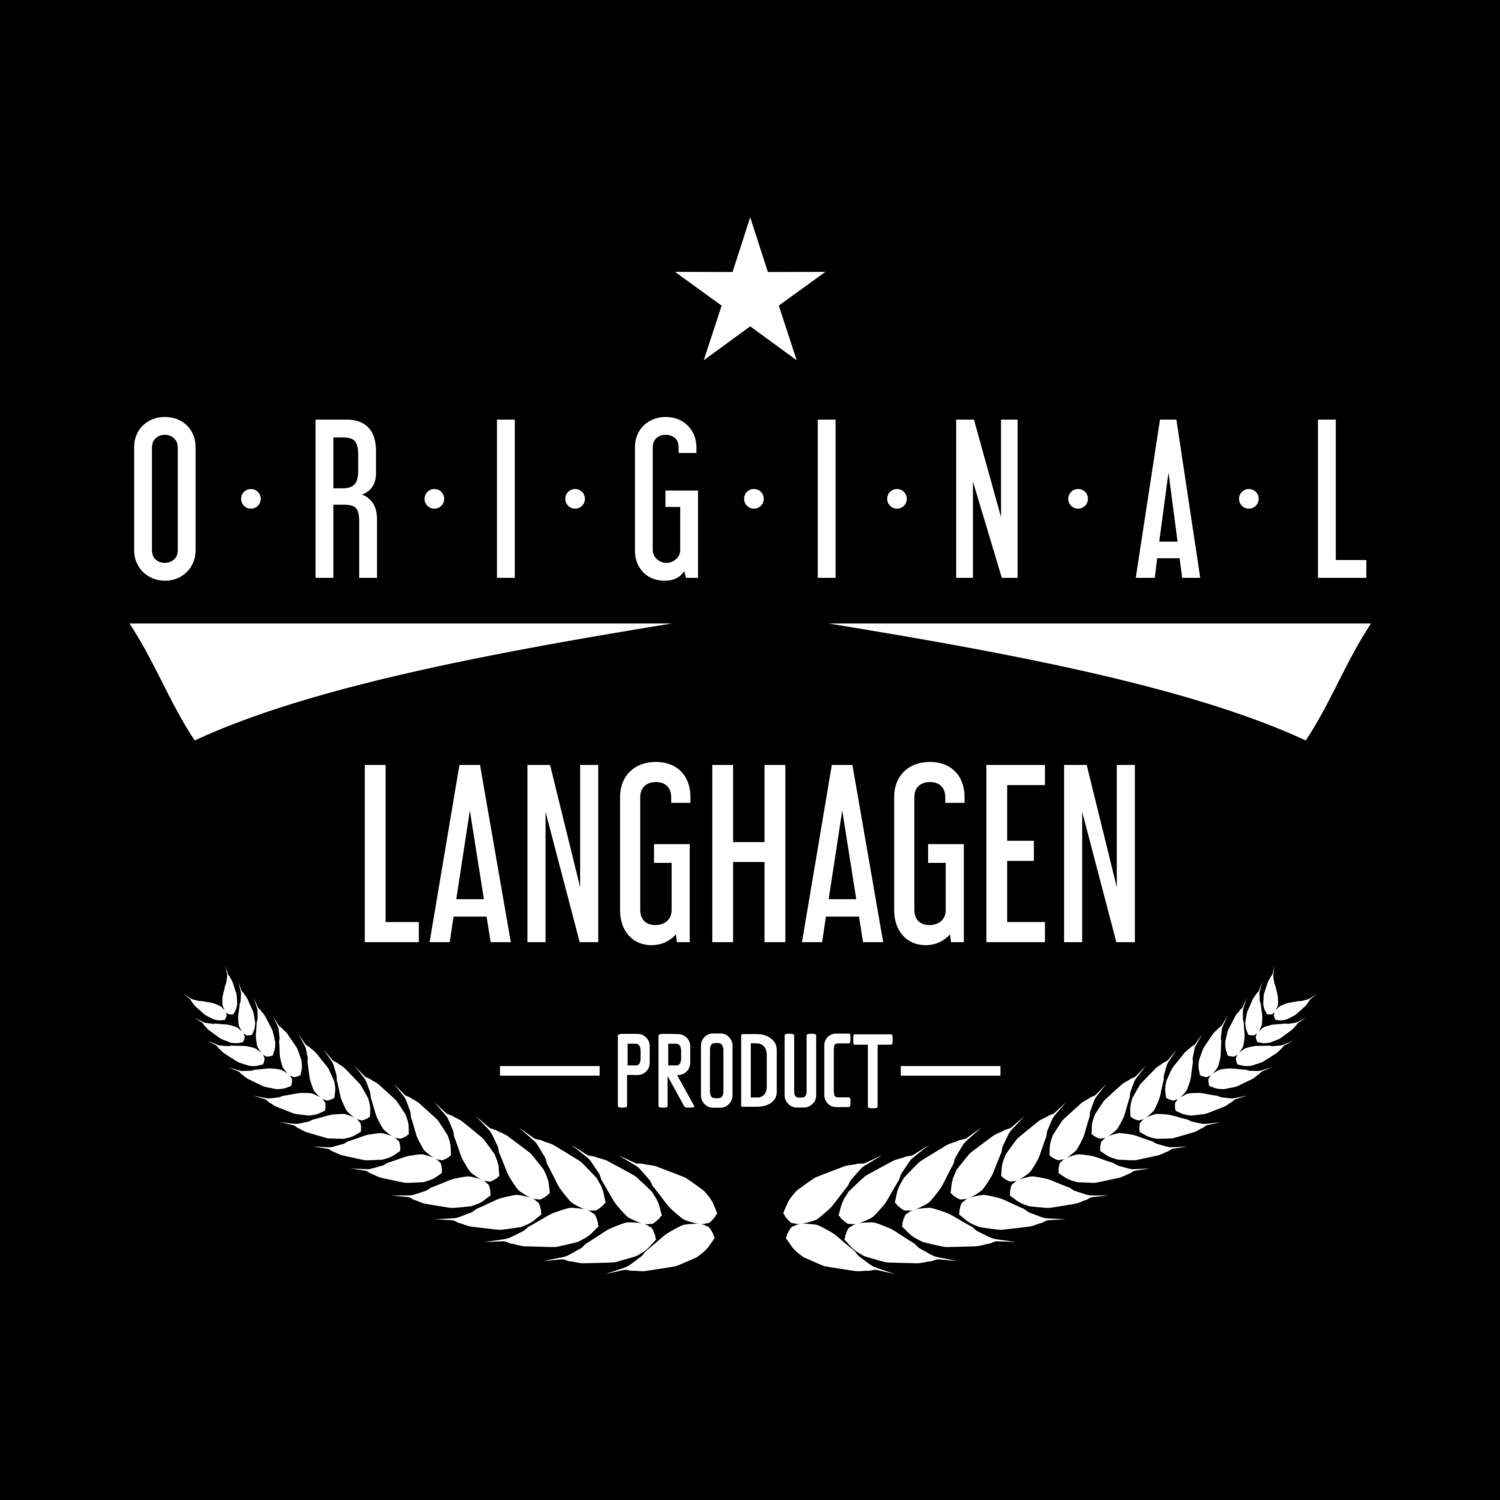 Langhagen T-Shirt »Original Product«